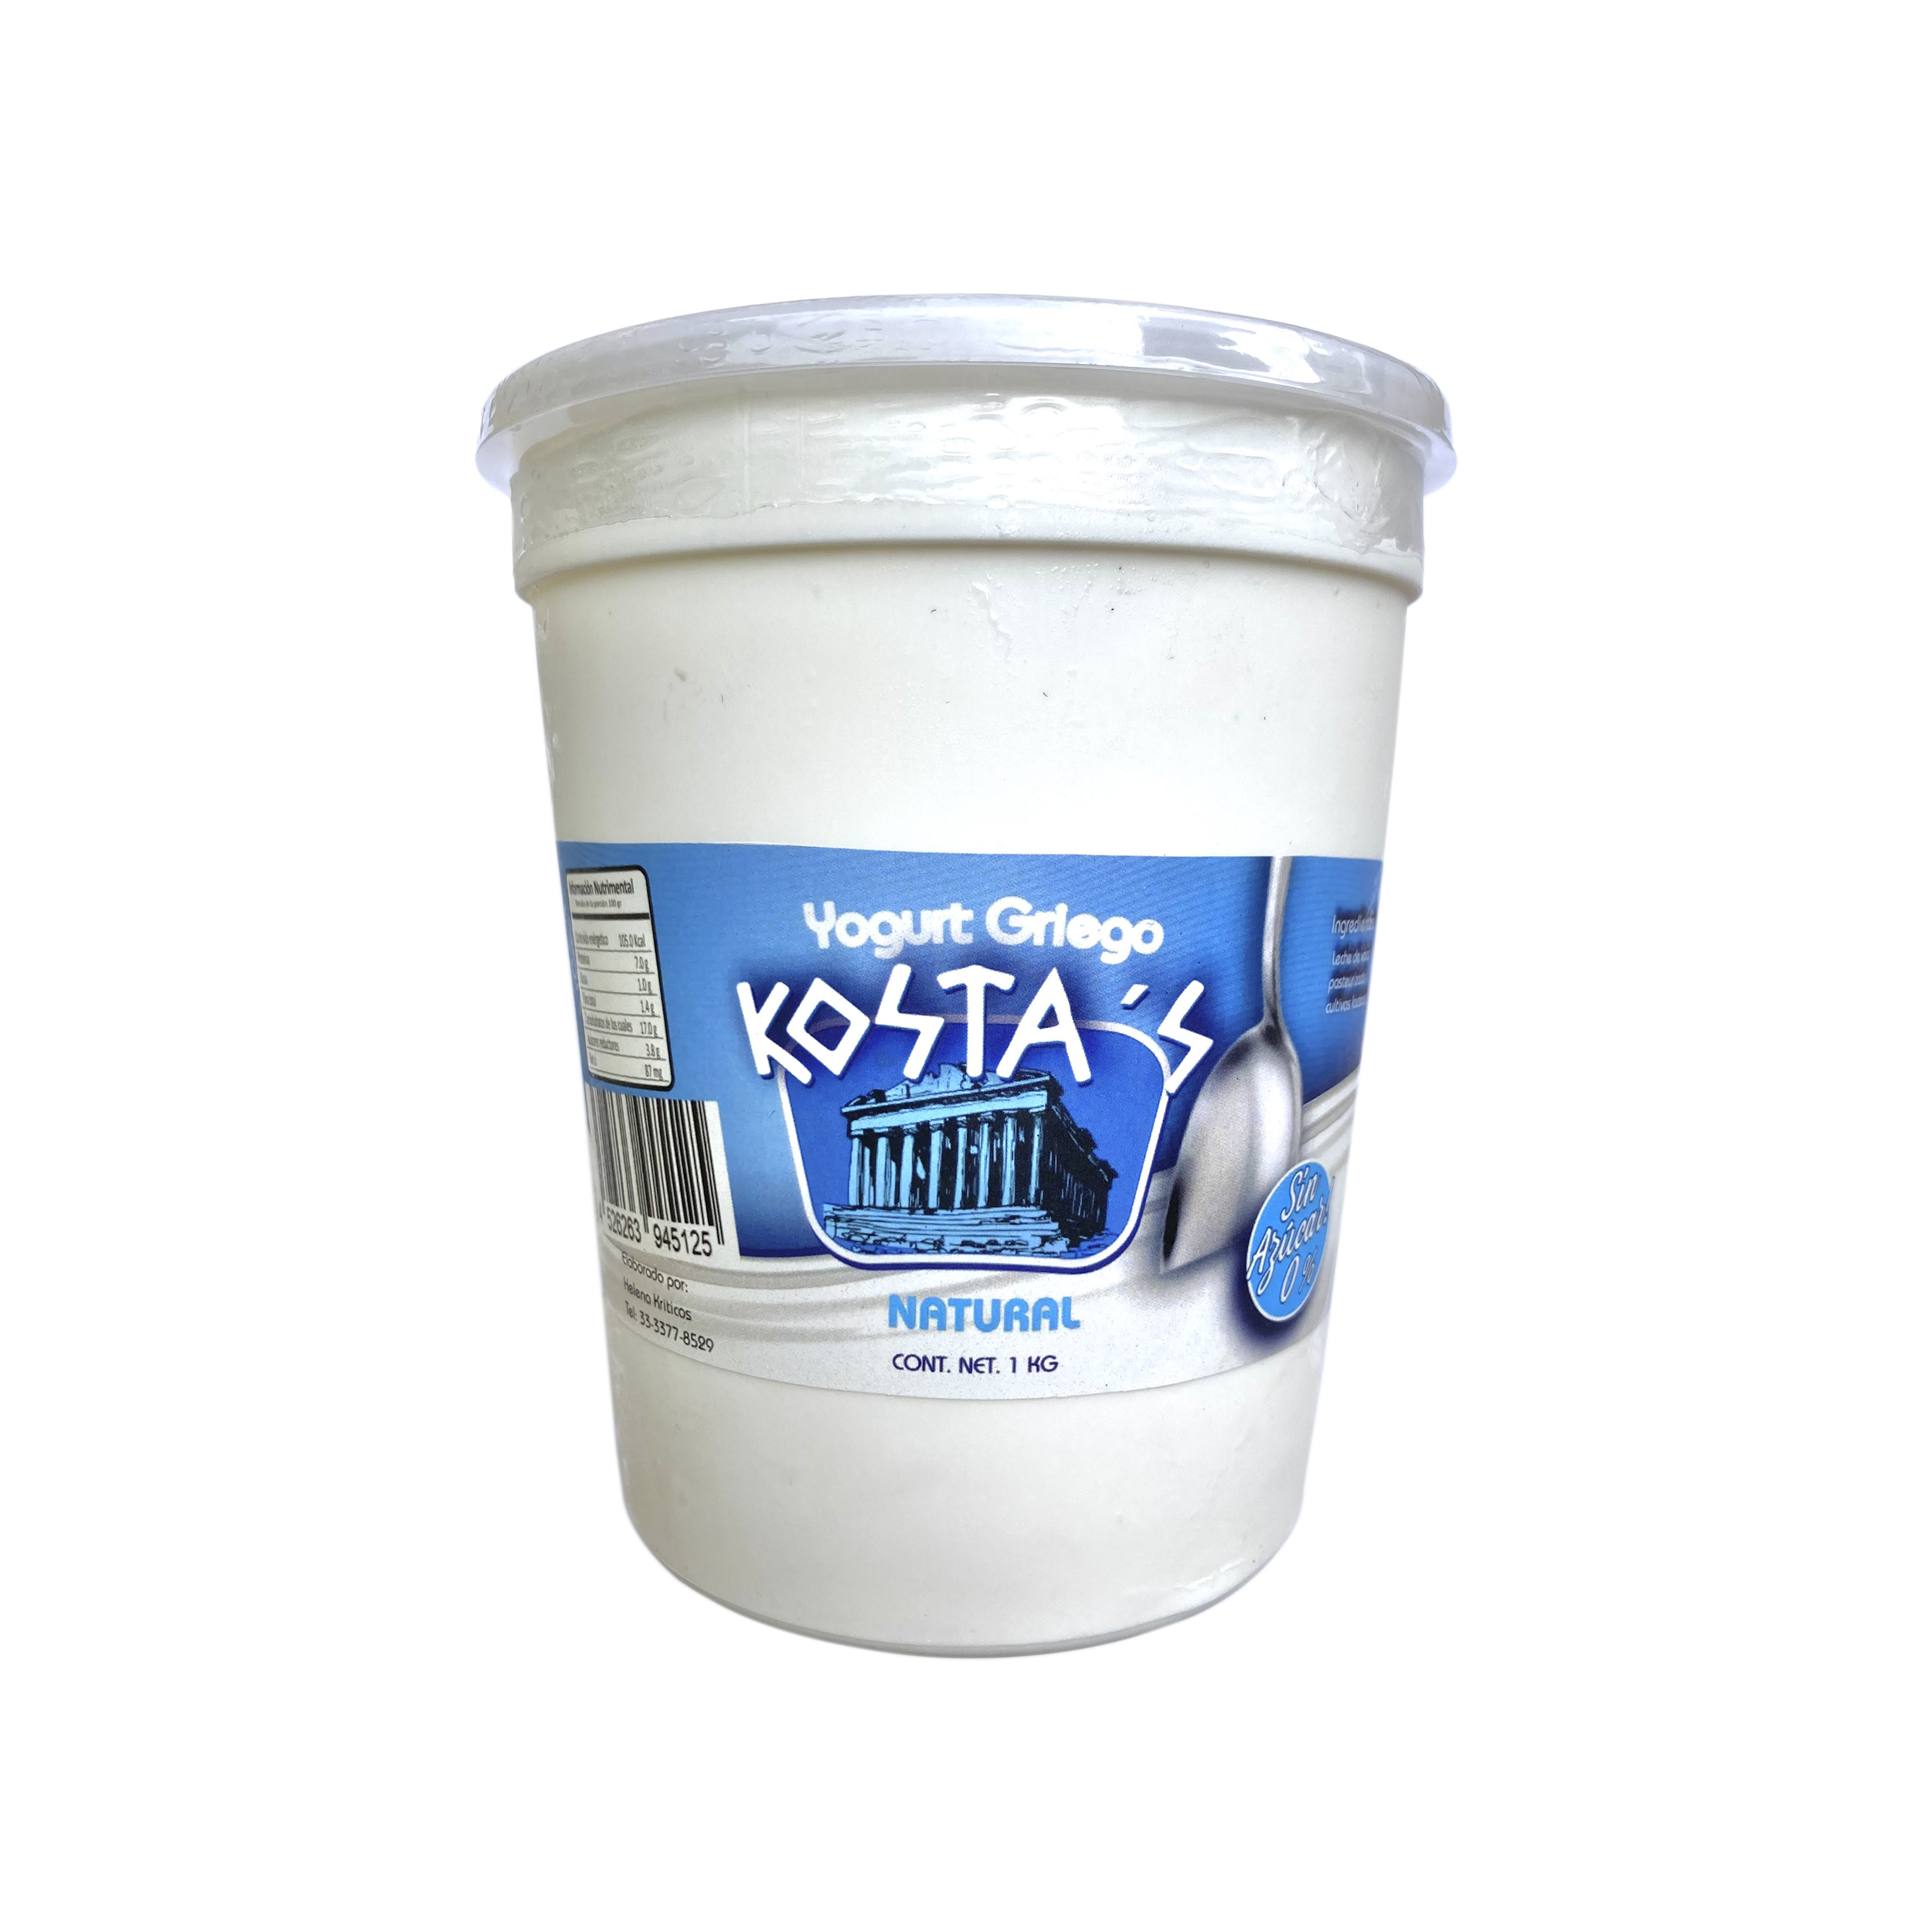 Kostas - Yogurt griego